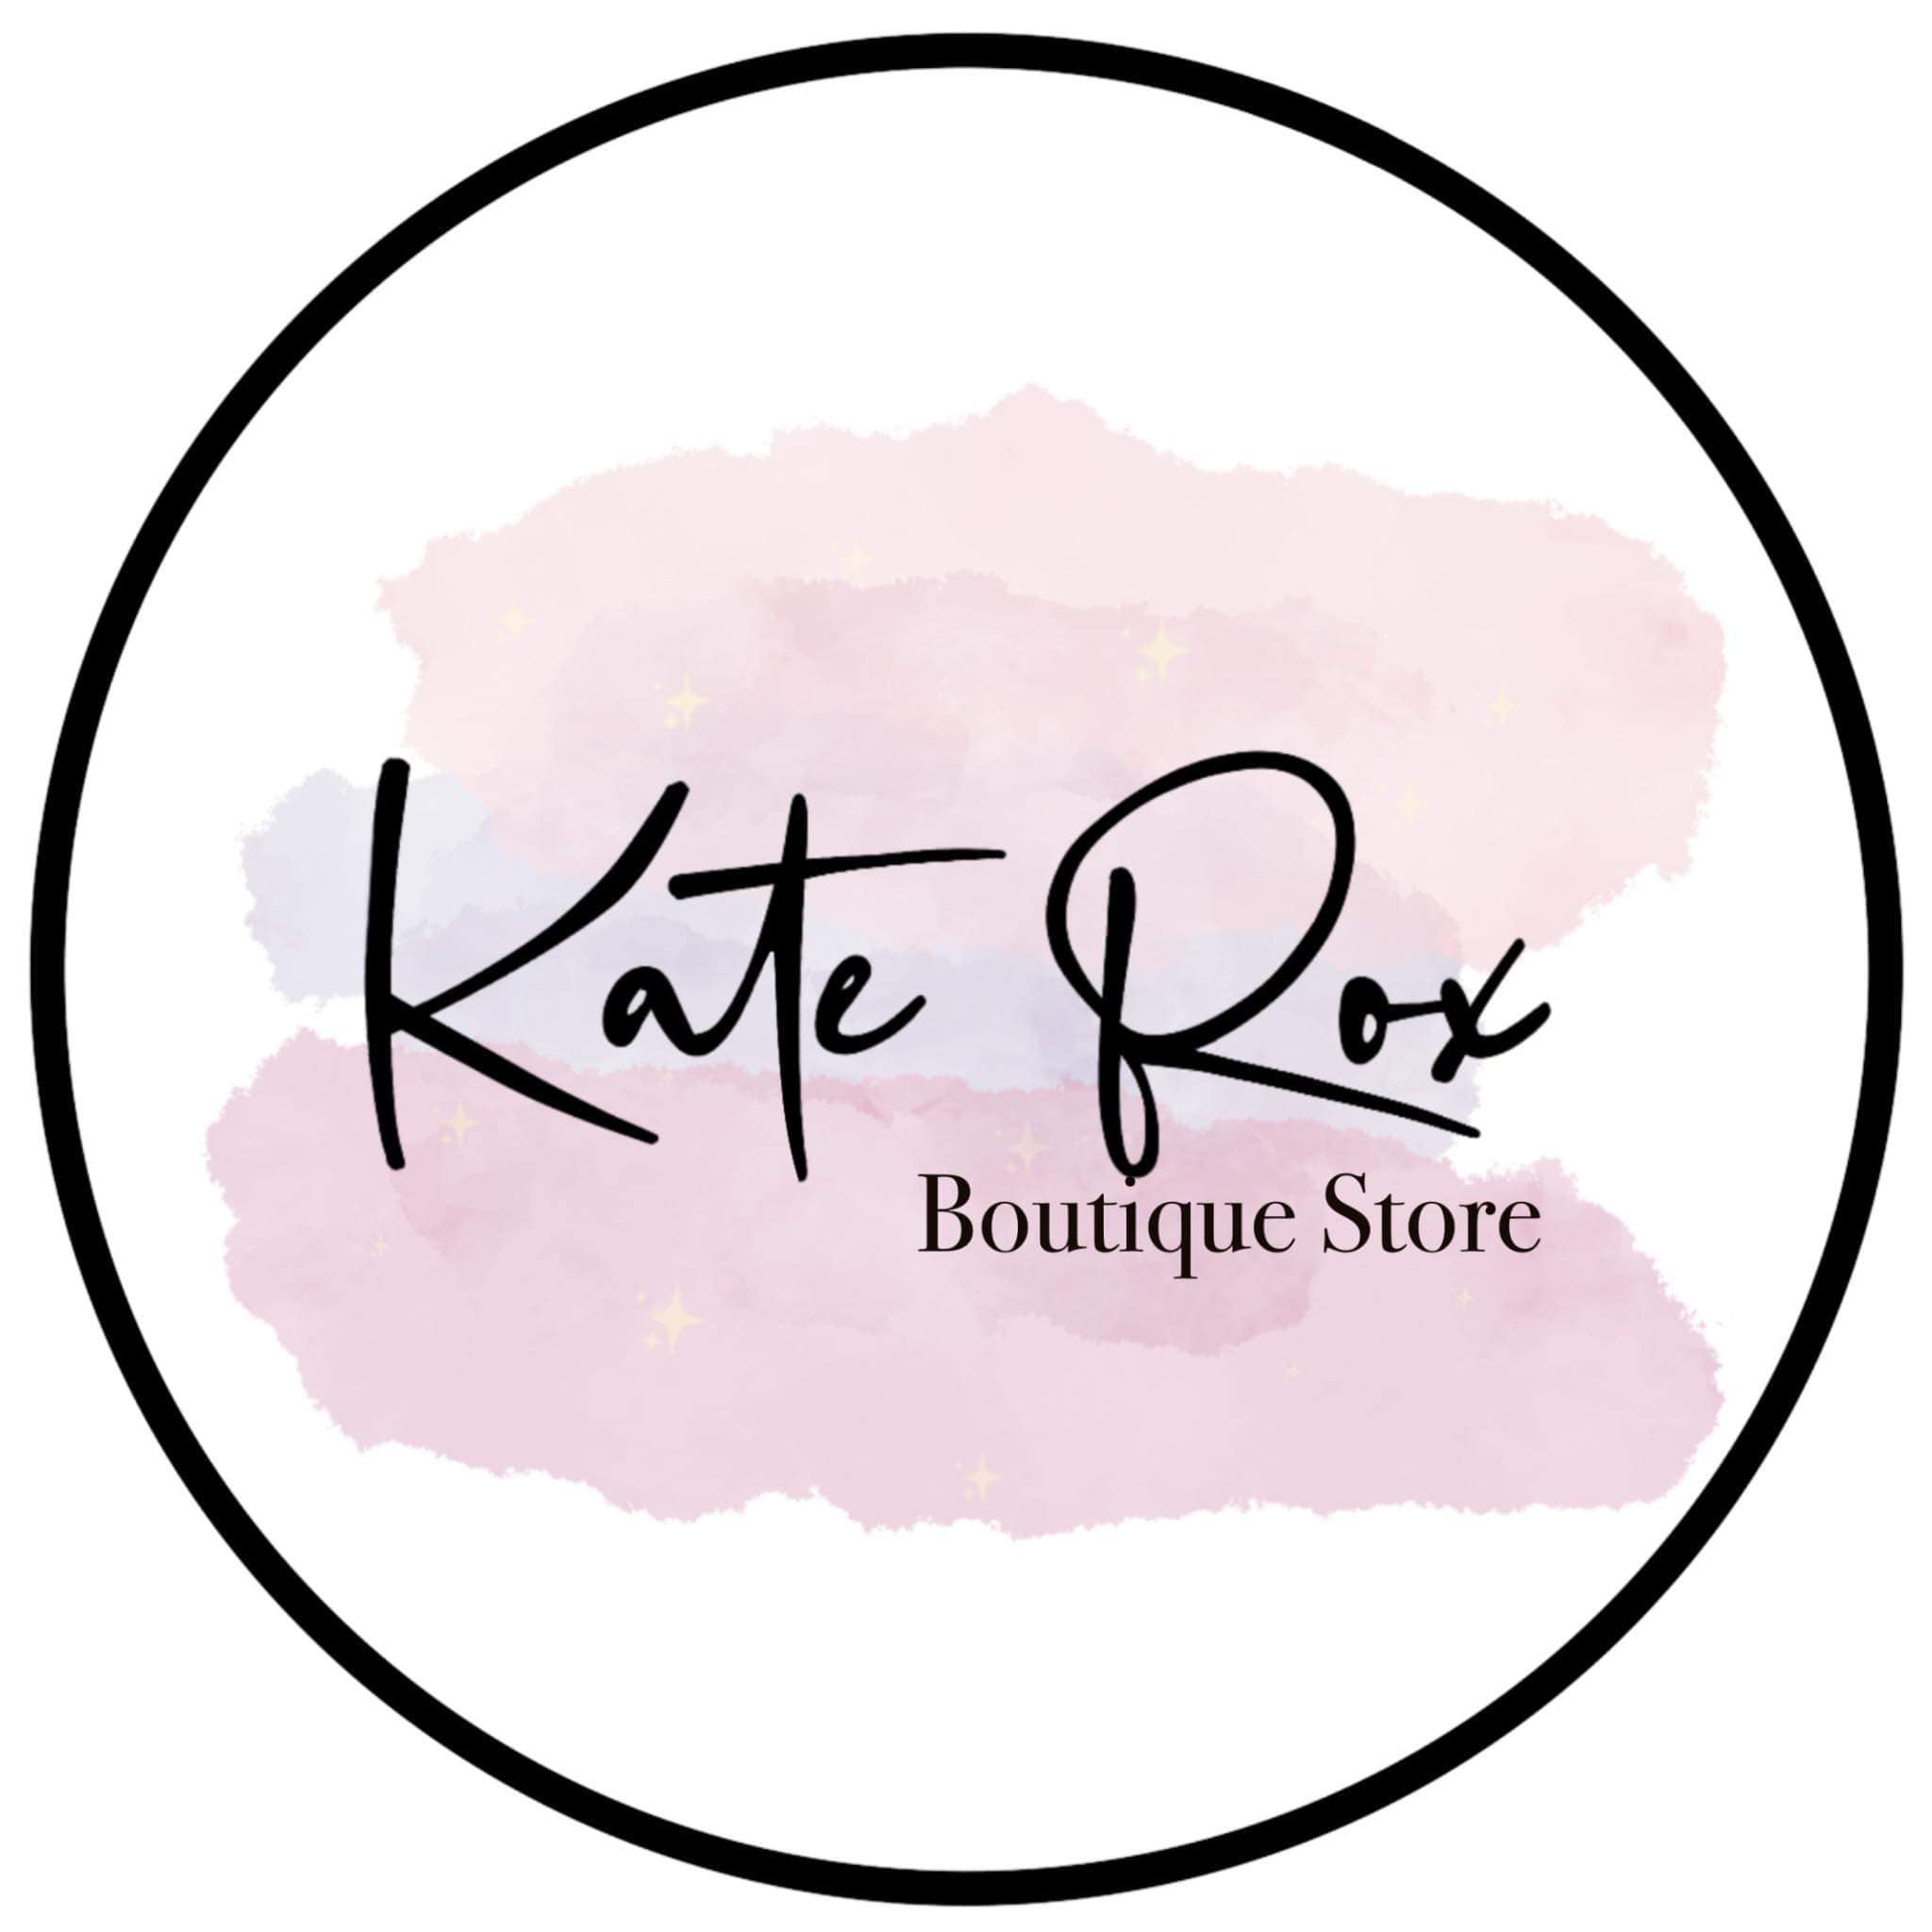 Kate Rox Boutique